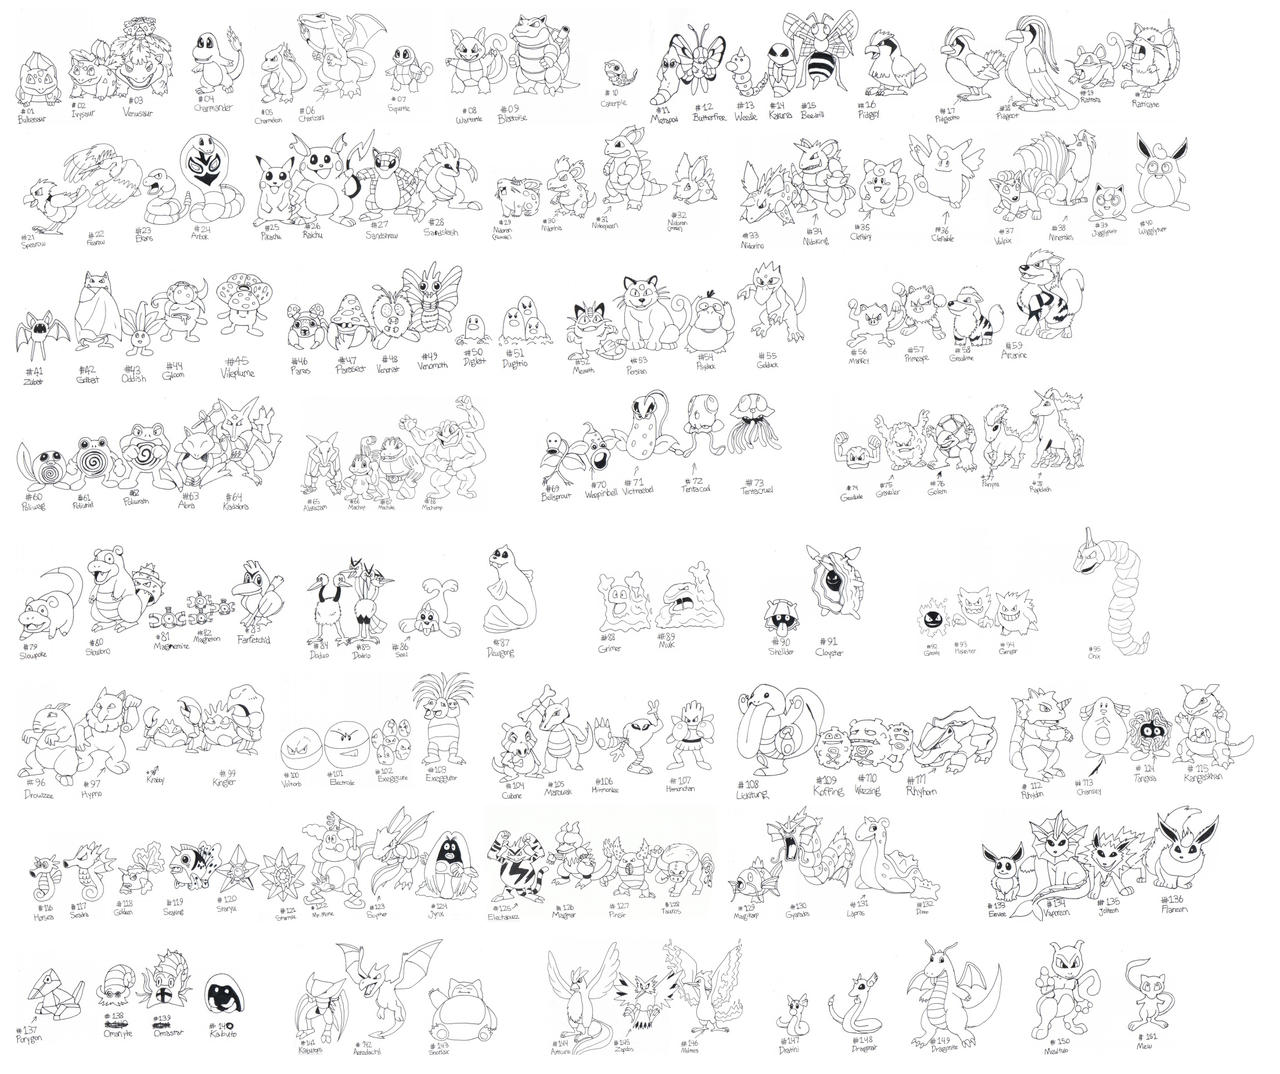 Psyduck  151 pokemon, Original 151 pokemon, Pokemon